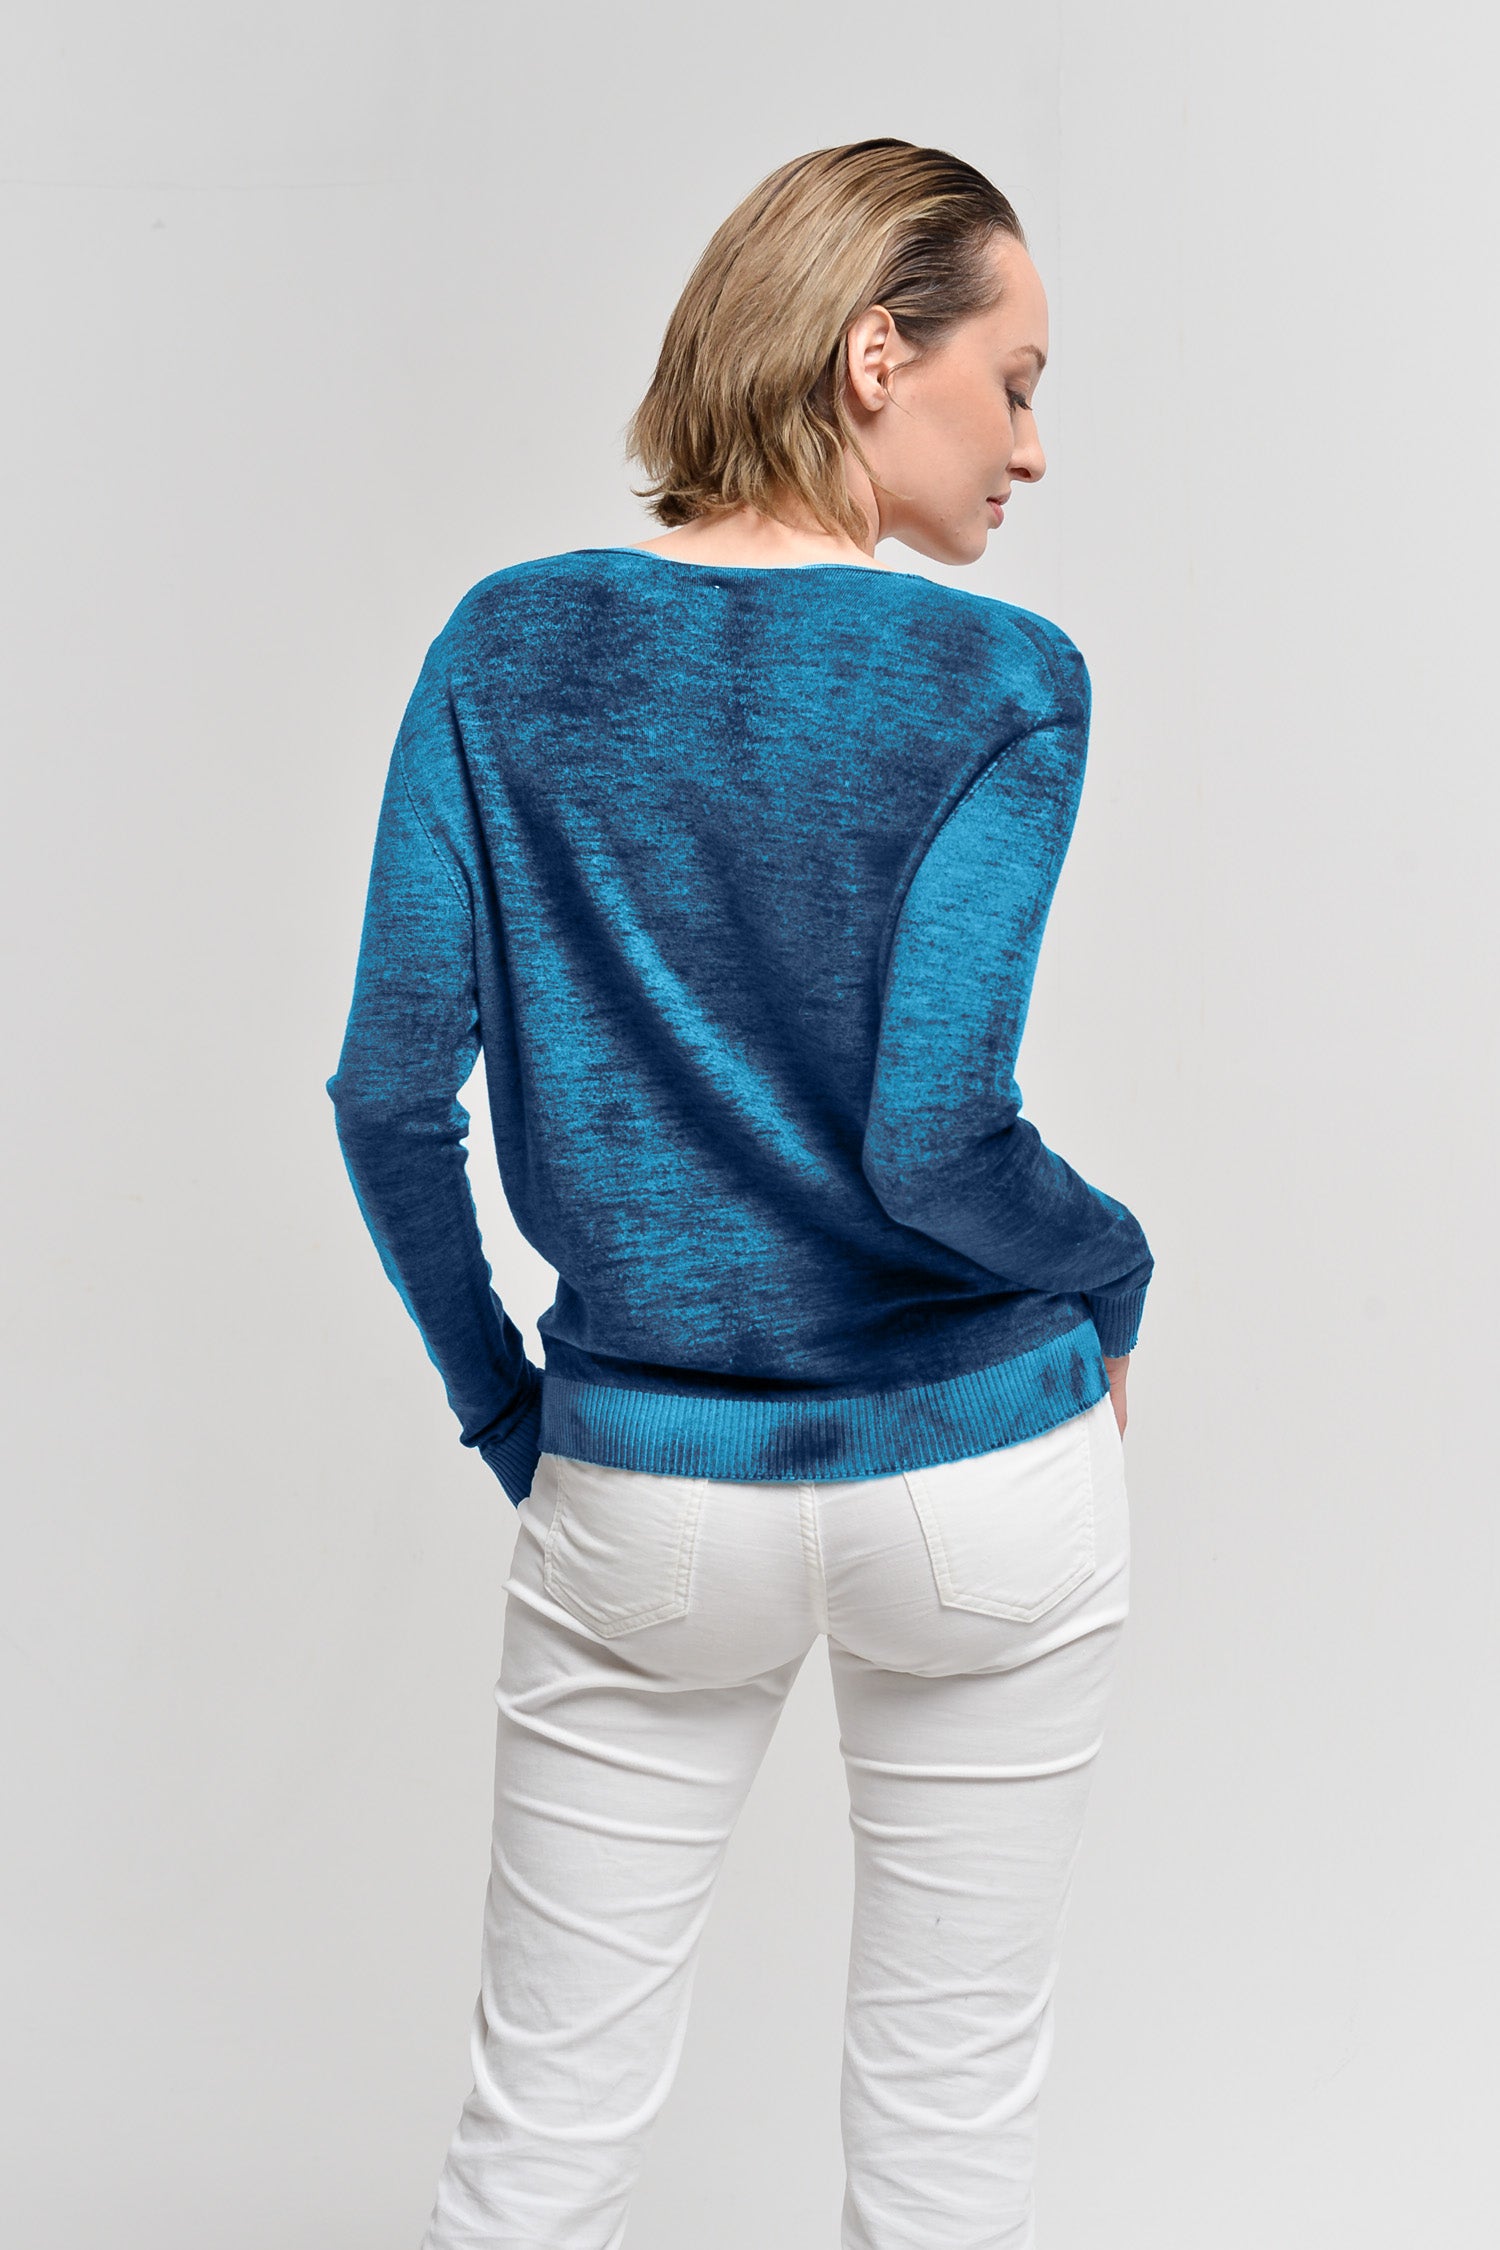 Port Rock Art Sweater - Kimber